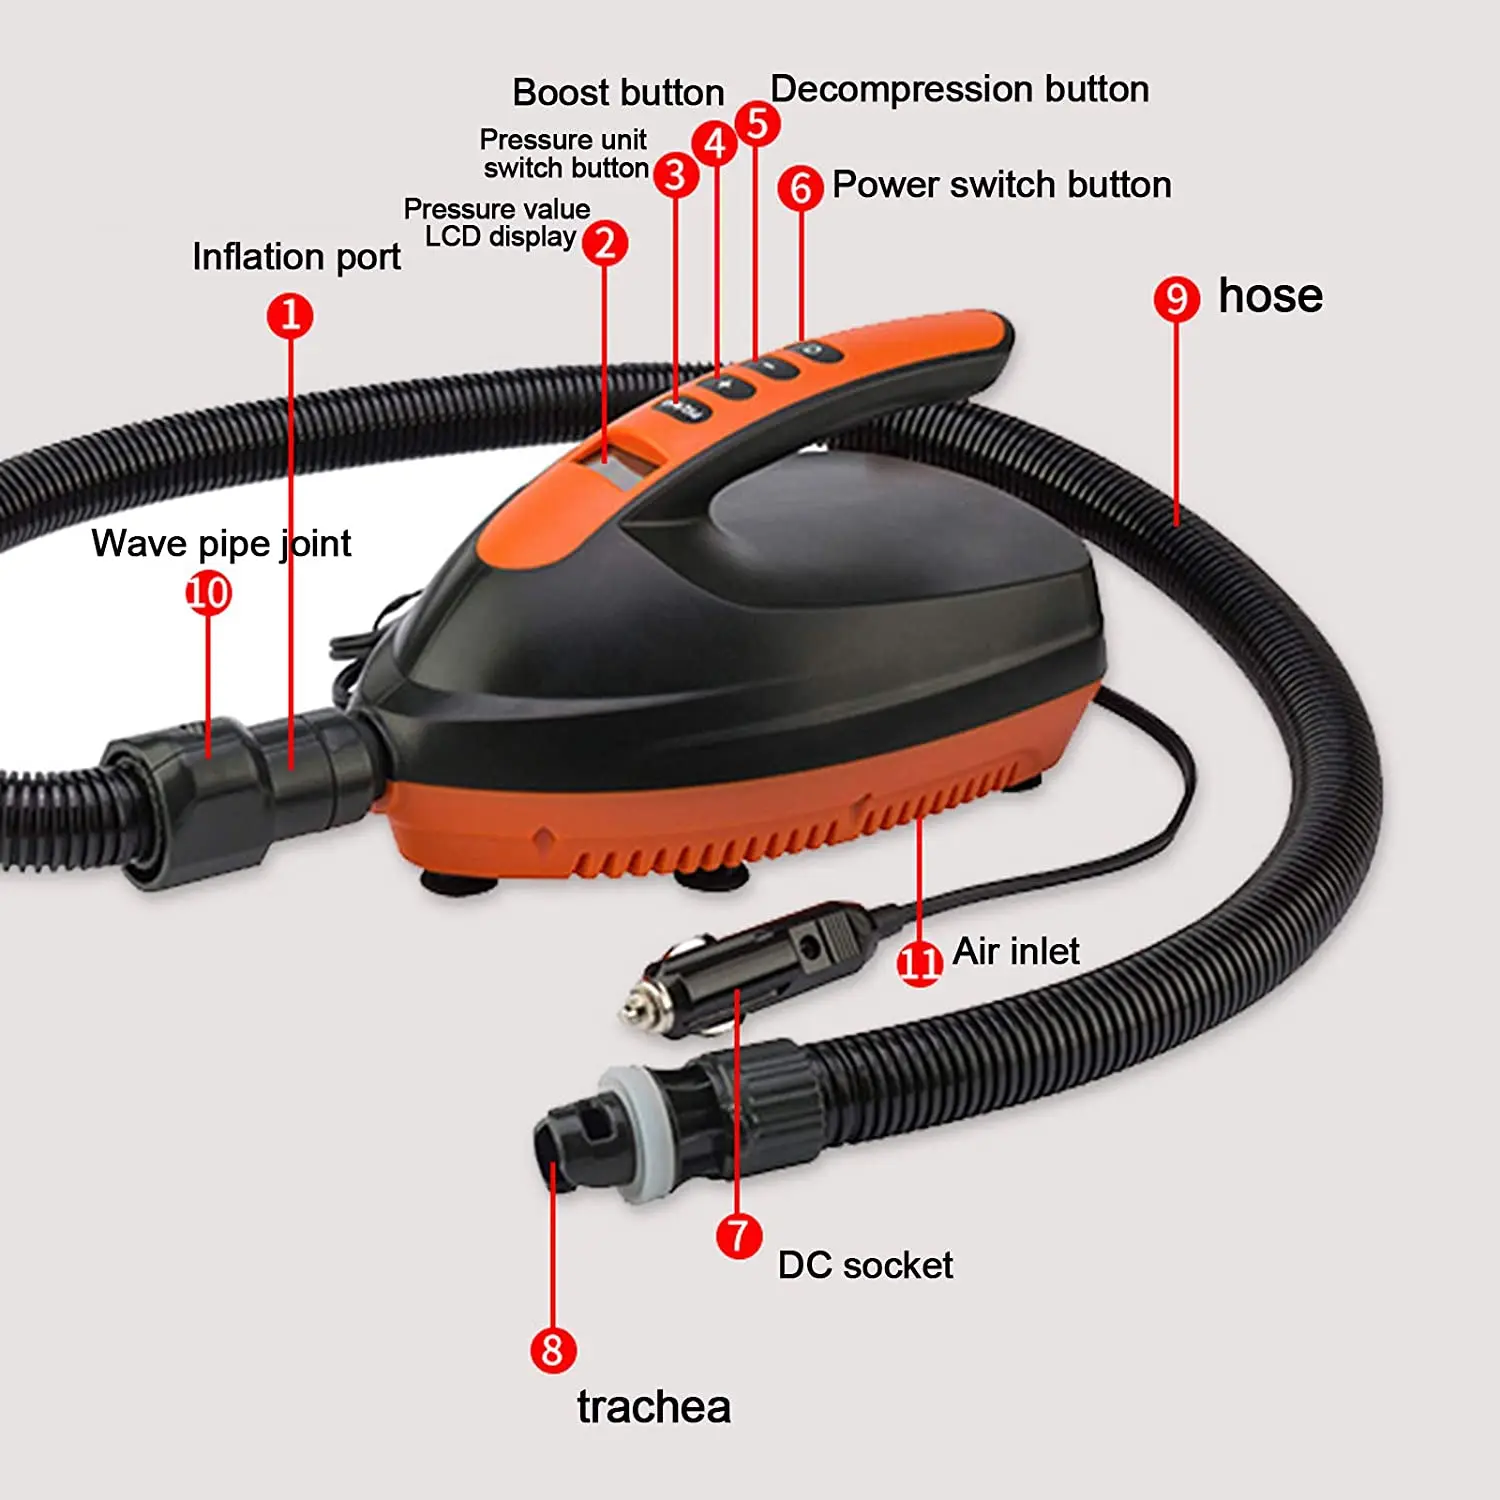 

12v sup pump electric wired portable smart digita paddle board inflator pump air inflatable boat kayak compressor air pump